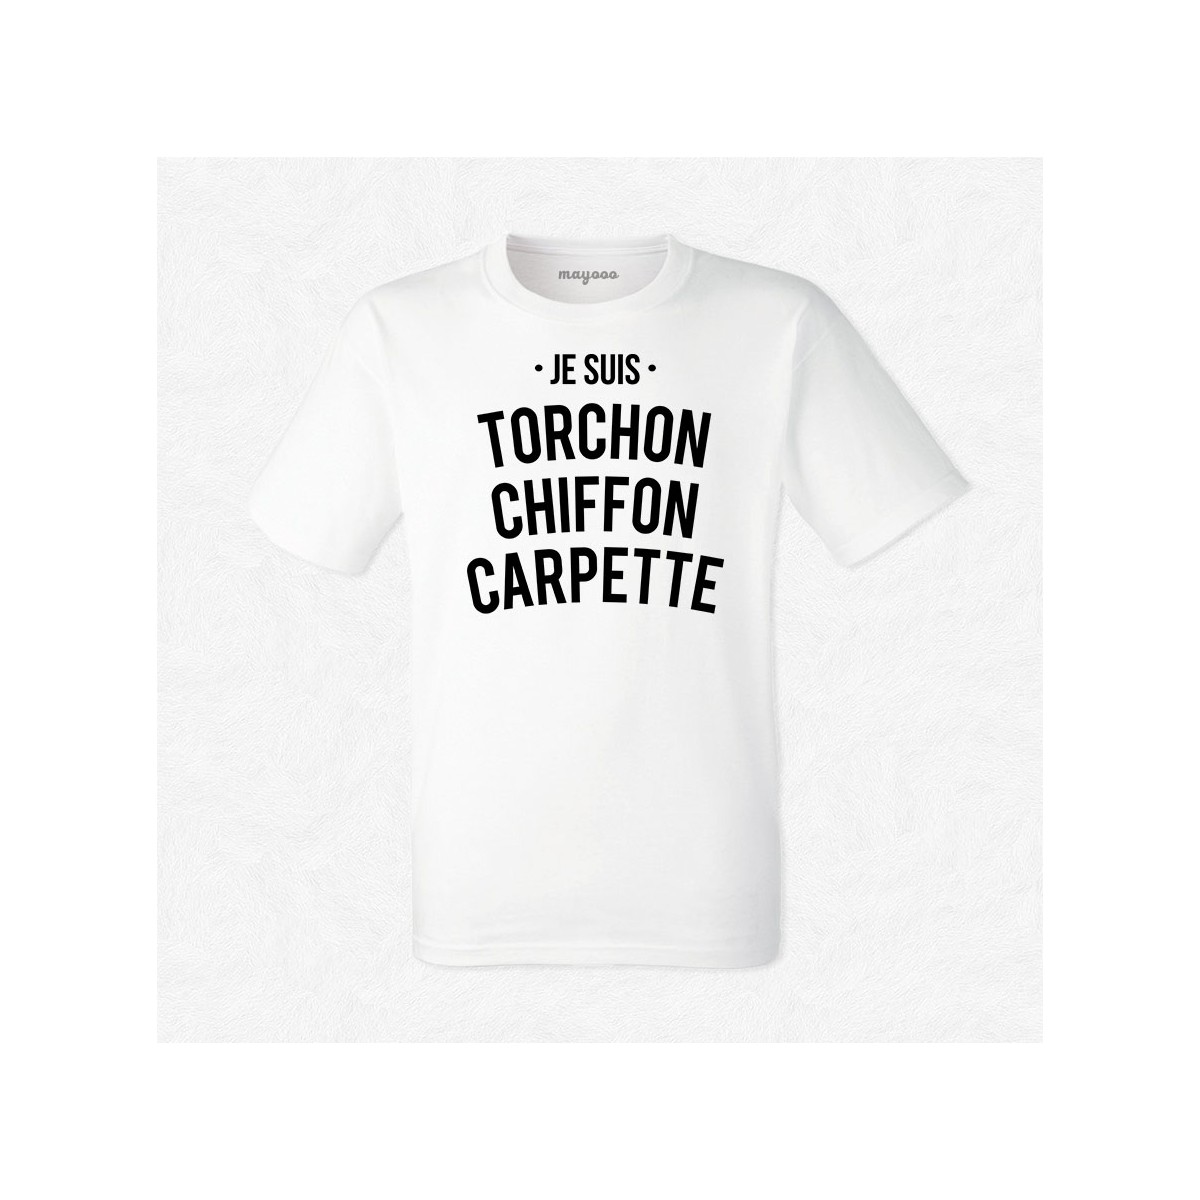 T-shirt Torchon chiffon carpette